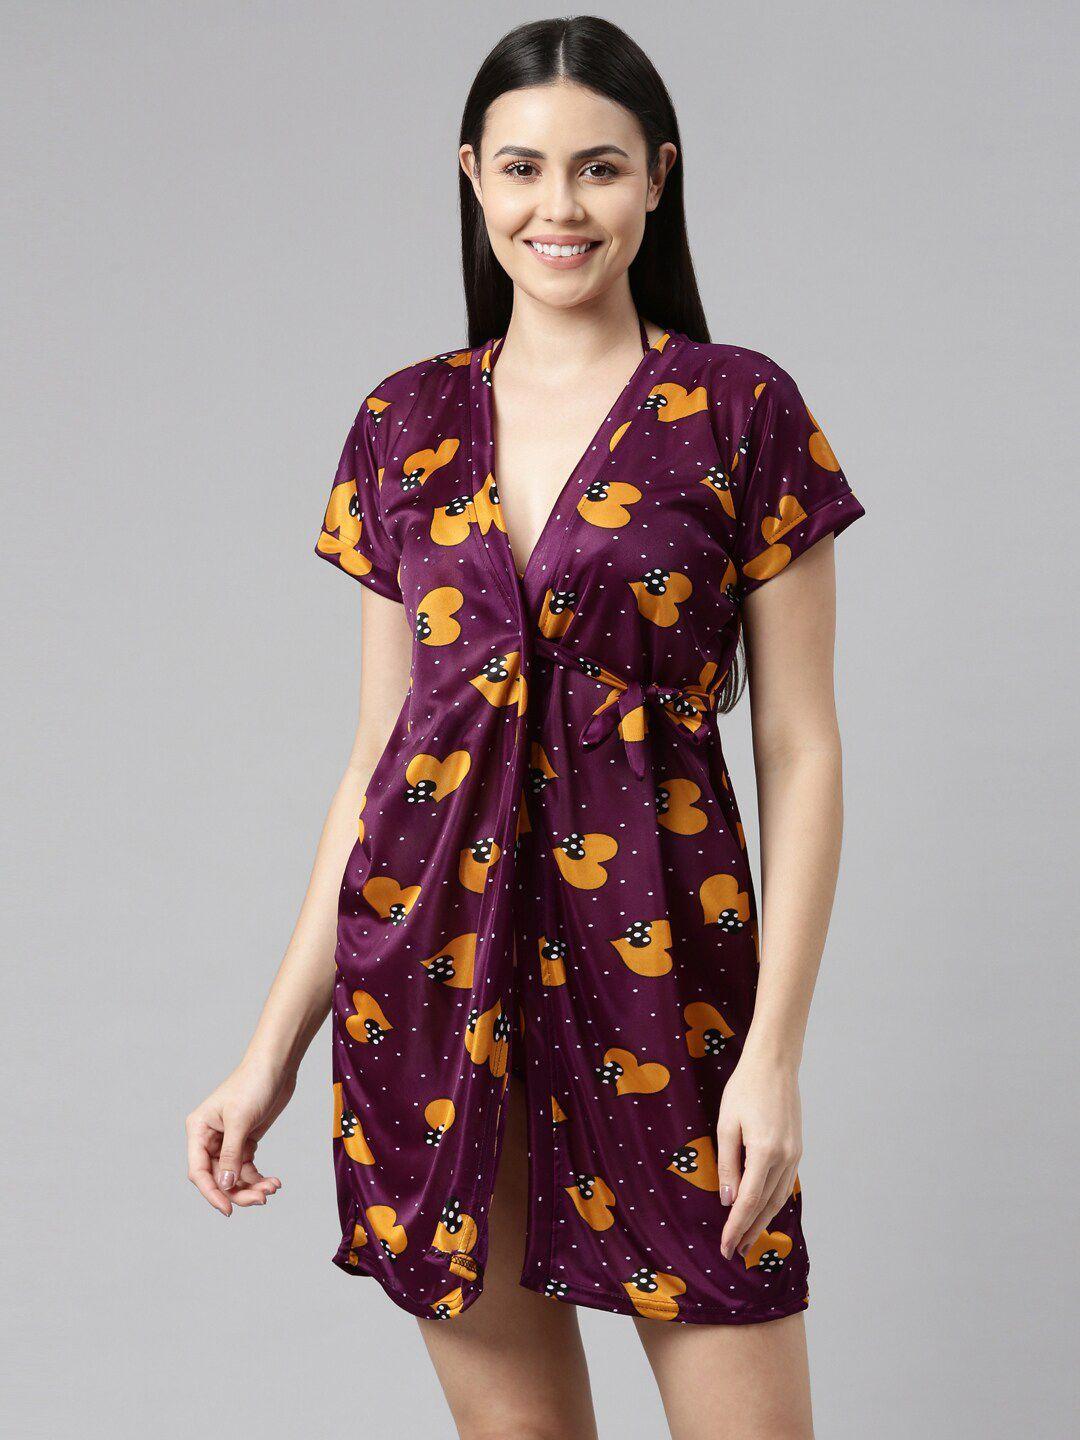 bailey sells purple printed nightdress